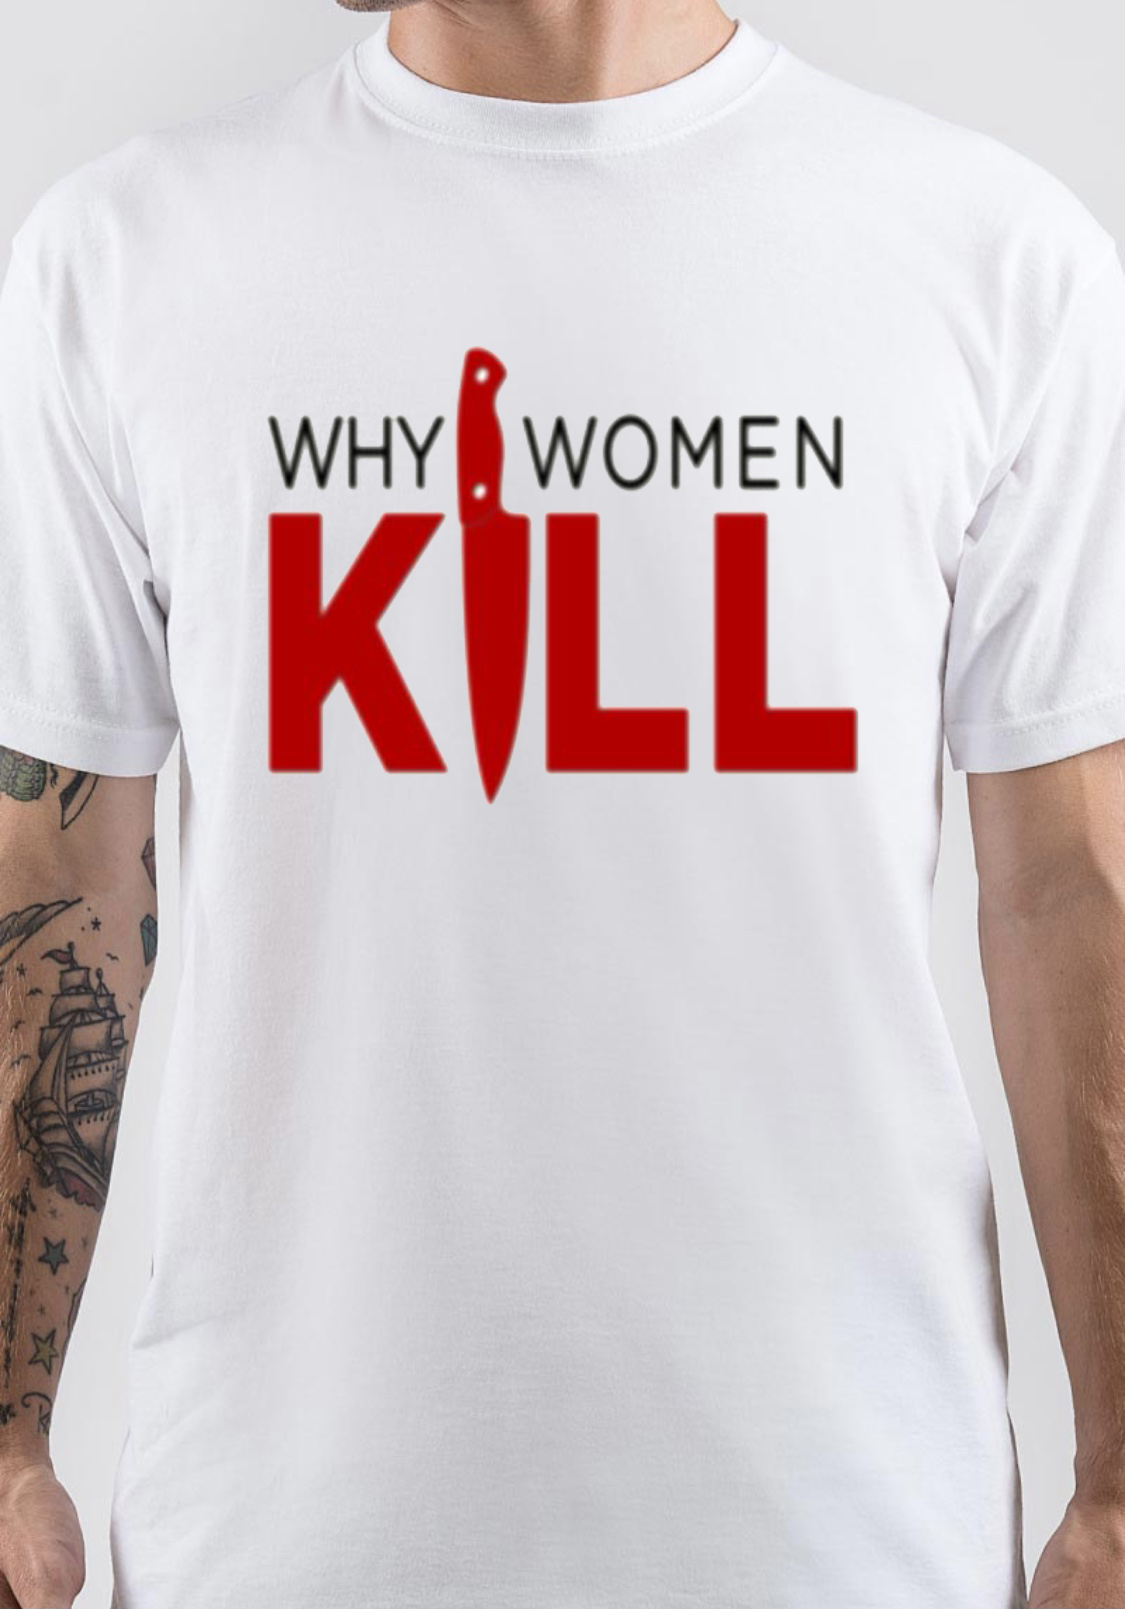 Why Women Kill T-Shirt And Merchandise